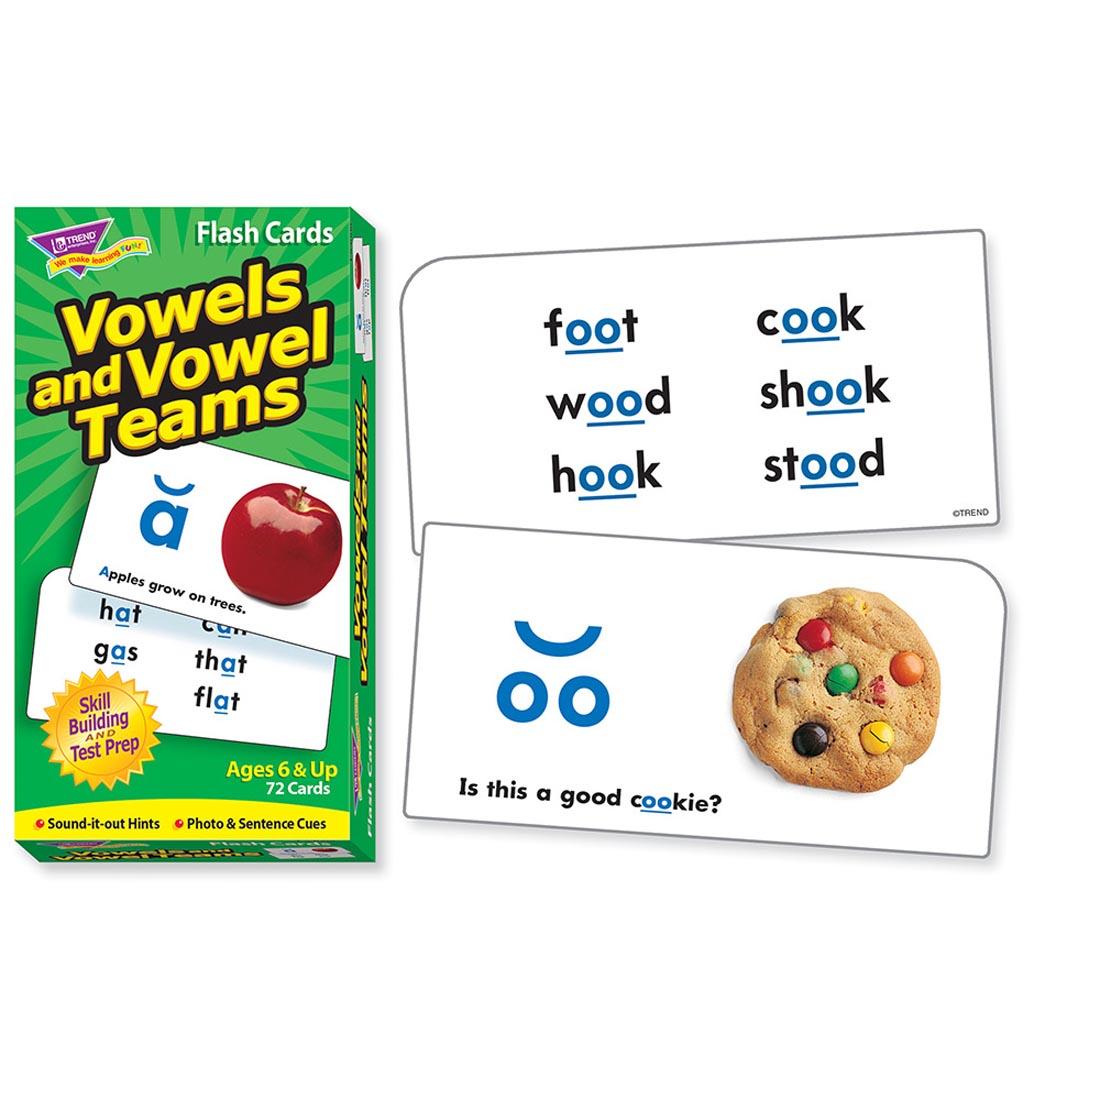 TREND Vowels & Vowel Teams Flash Cards